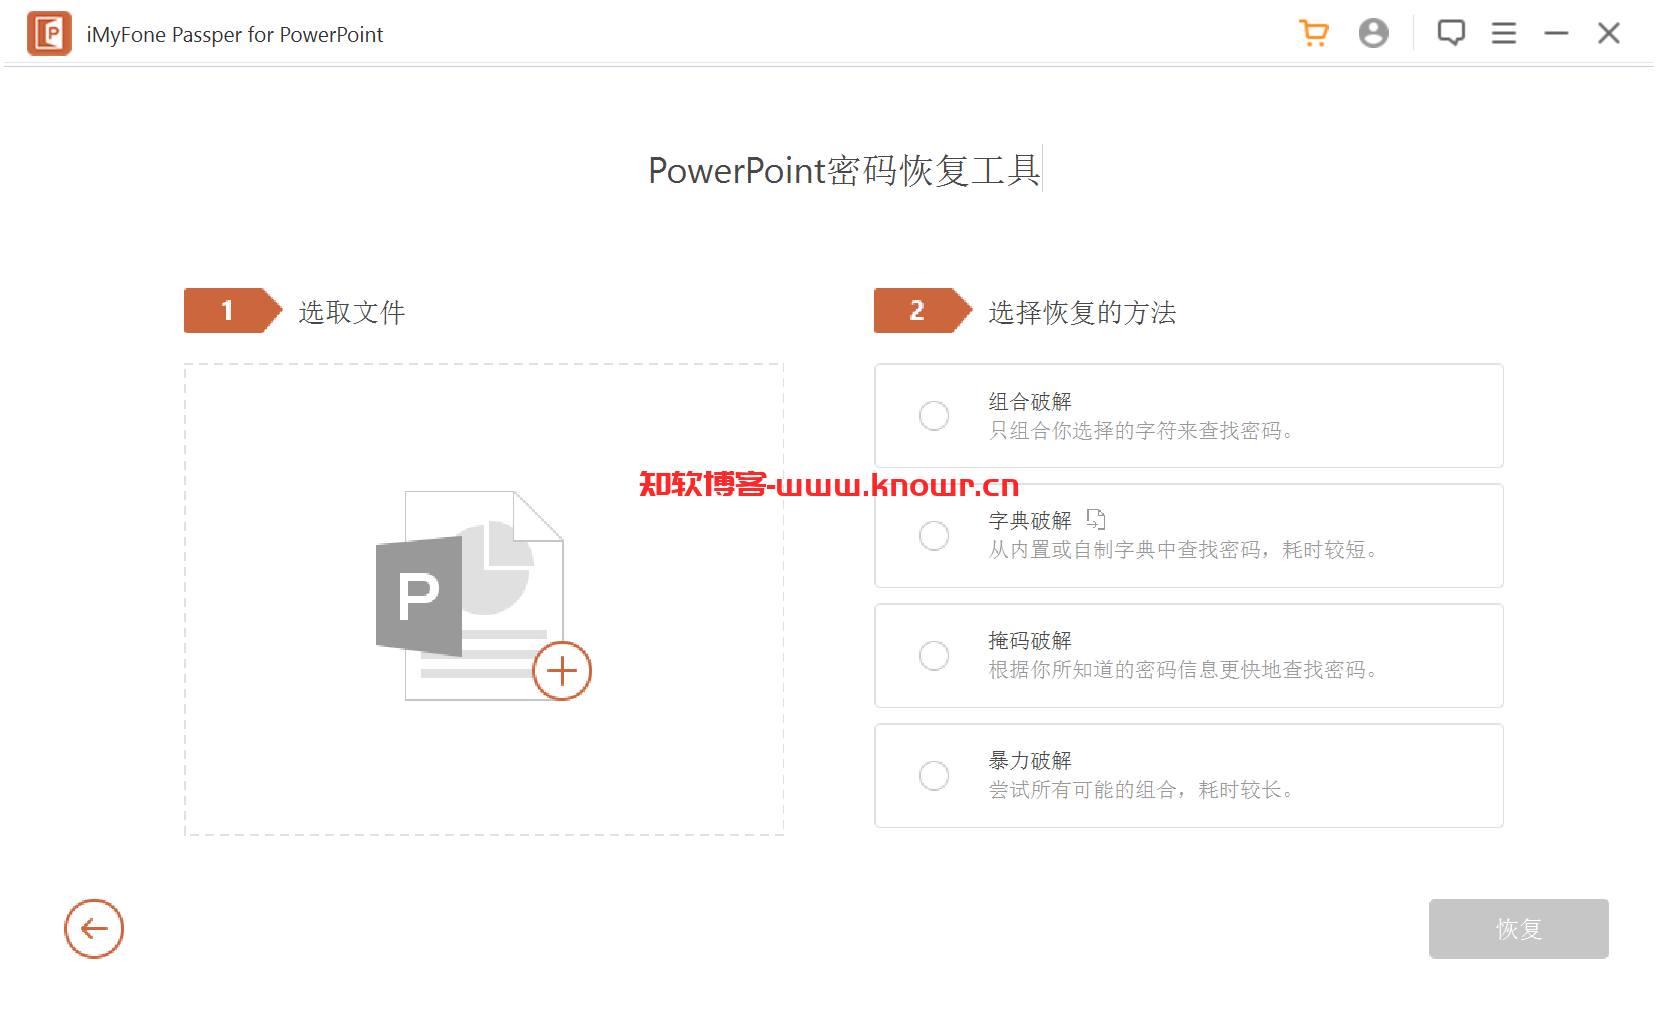 PPT文稿解锁 Passper for PowerPoint v3.9.2.5 中文破解版